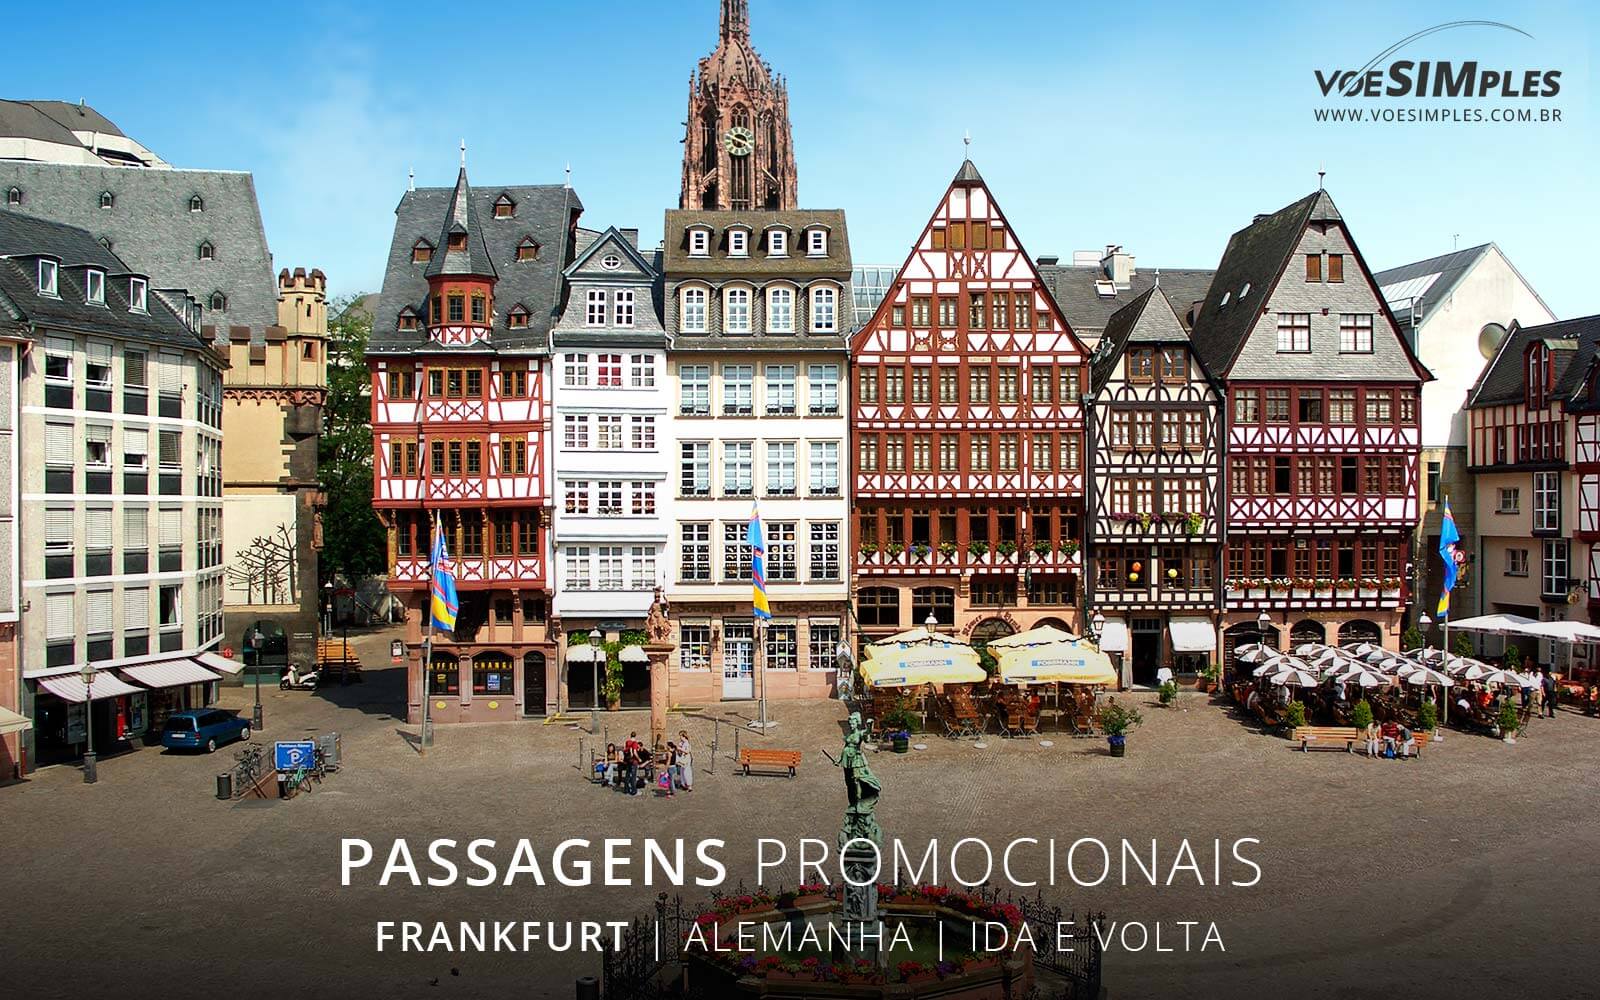 passagens-aereas-baratas-frankfurt-alemanha-europa-voe-simples-passages-aereas-promocionais-alemanha-passagens-promo-frankfurt